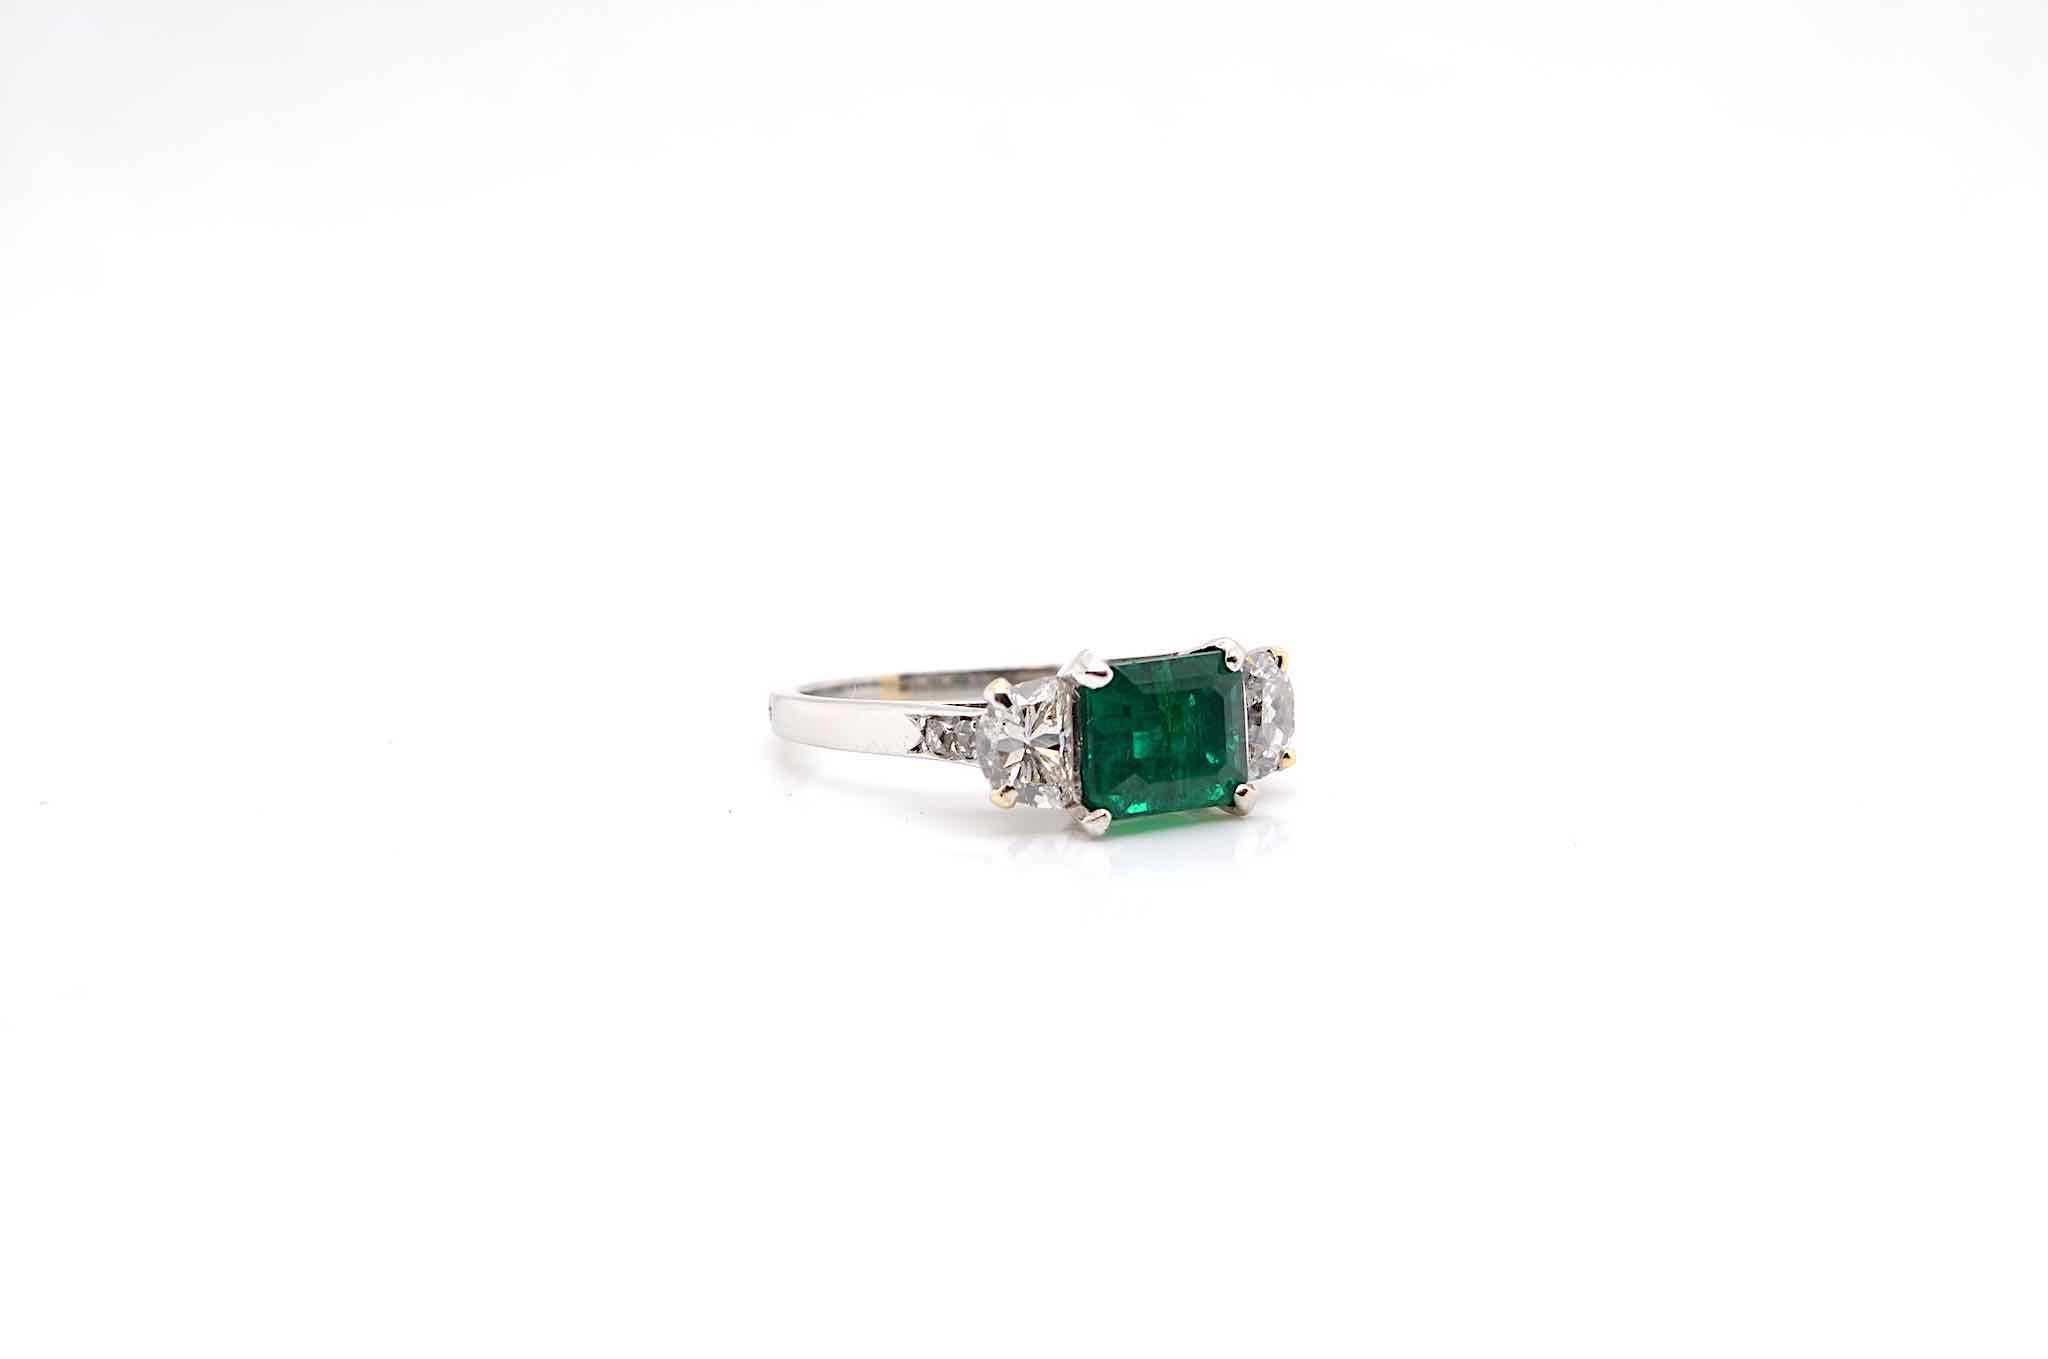 Emerald Cut Emerald ring with half-moon diamonds